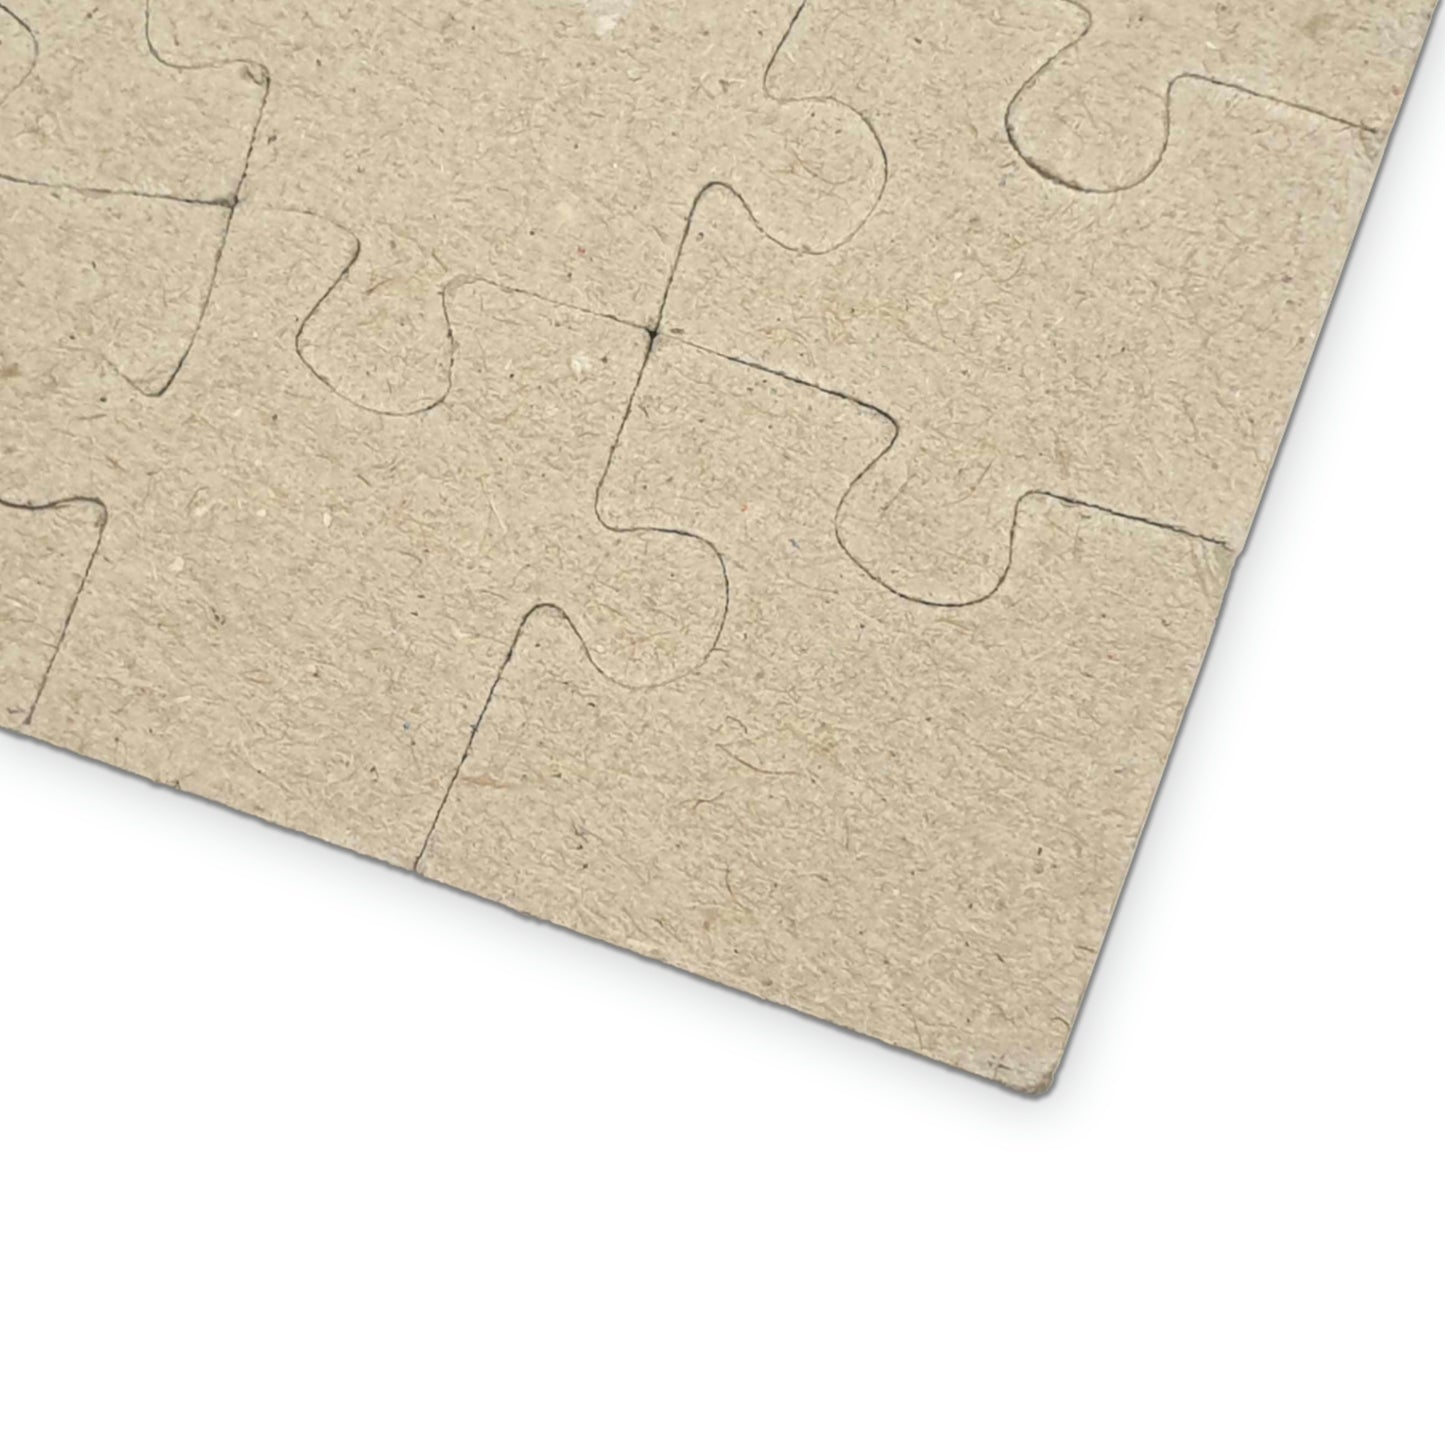 The Fargoer - 1000 Piece Jigsaw Puzzle